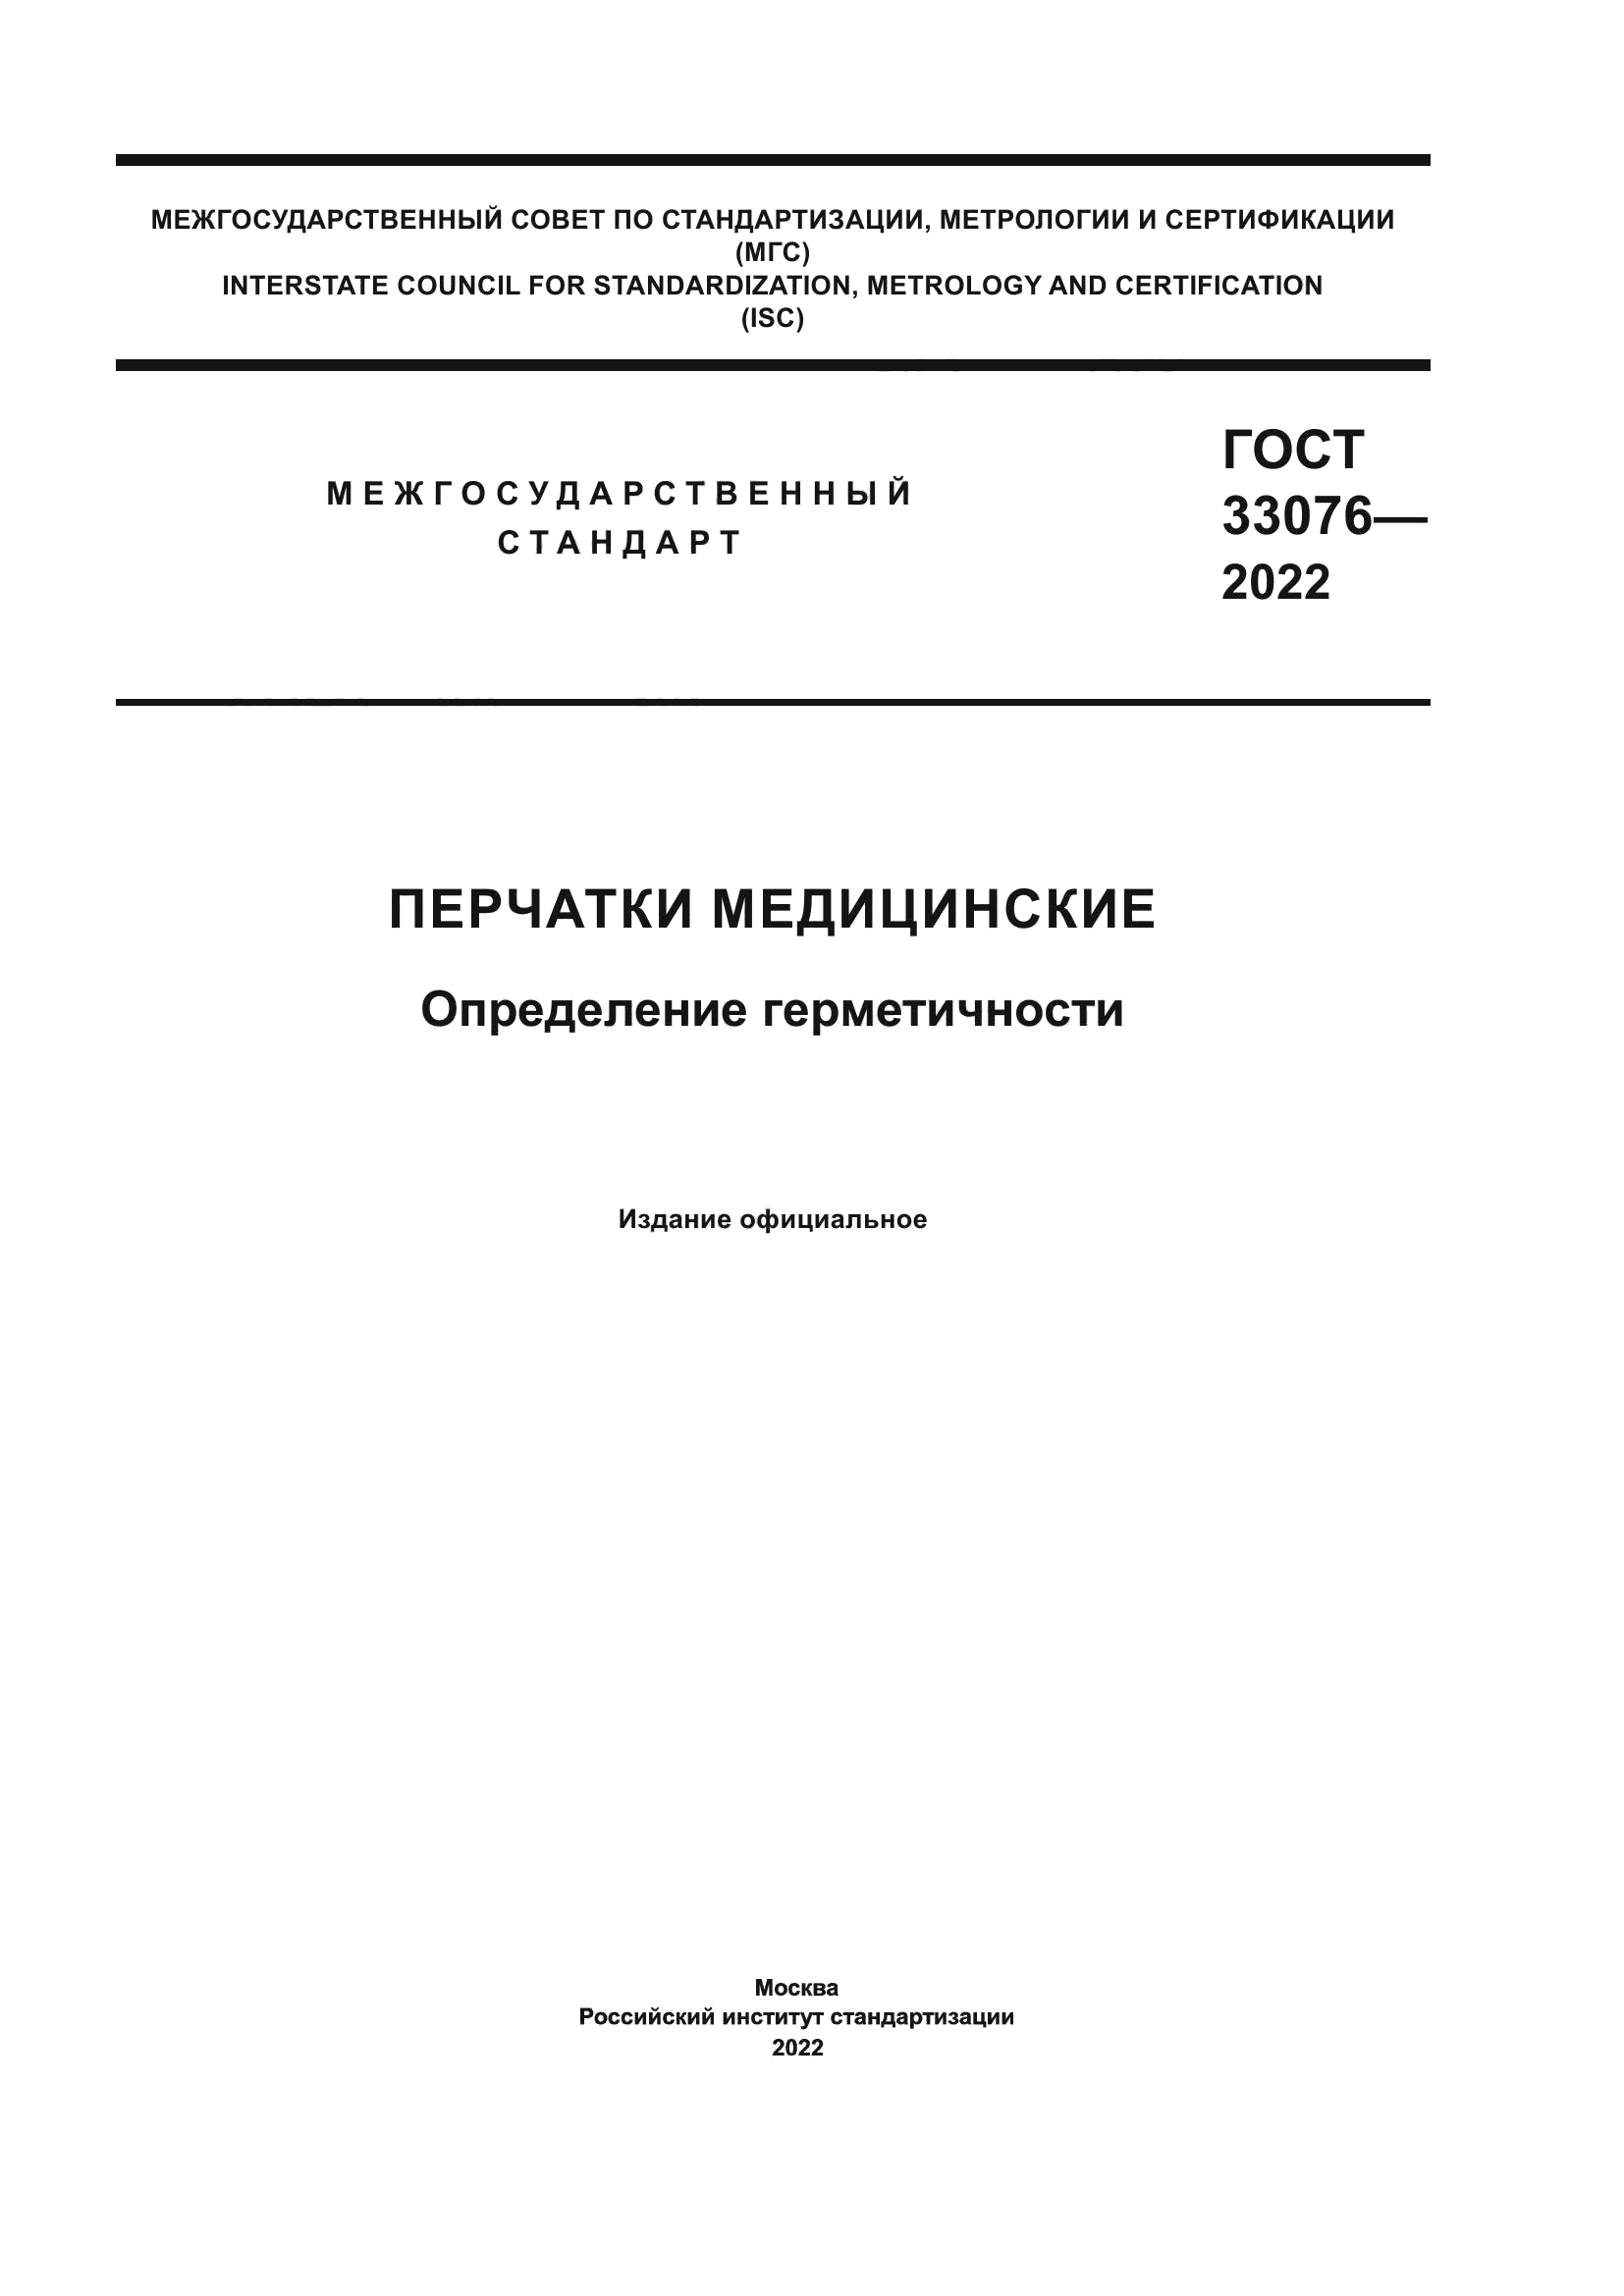 ГОСТ 33076-2022